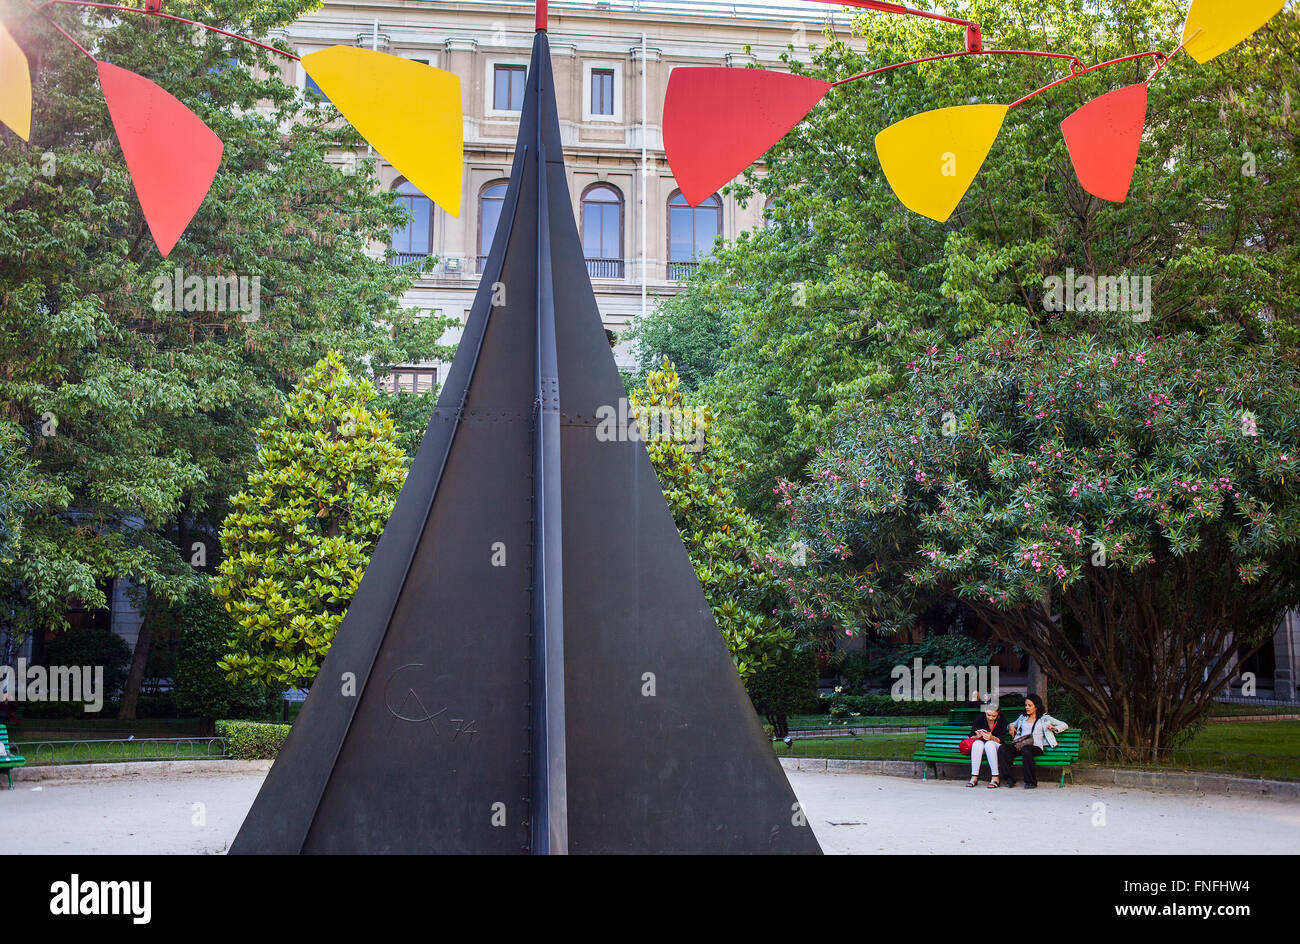 Carmen sculpture by Alexander Calder, in Sabatini garden of Reina Sofia National Art Museum, Madrid, Spain. Stock Photo